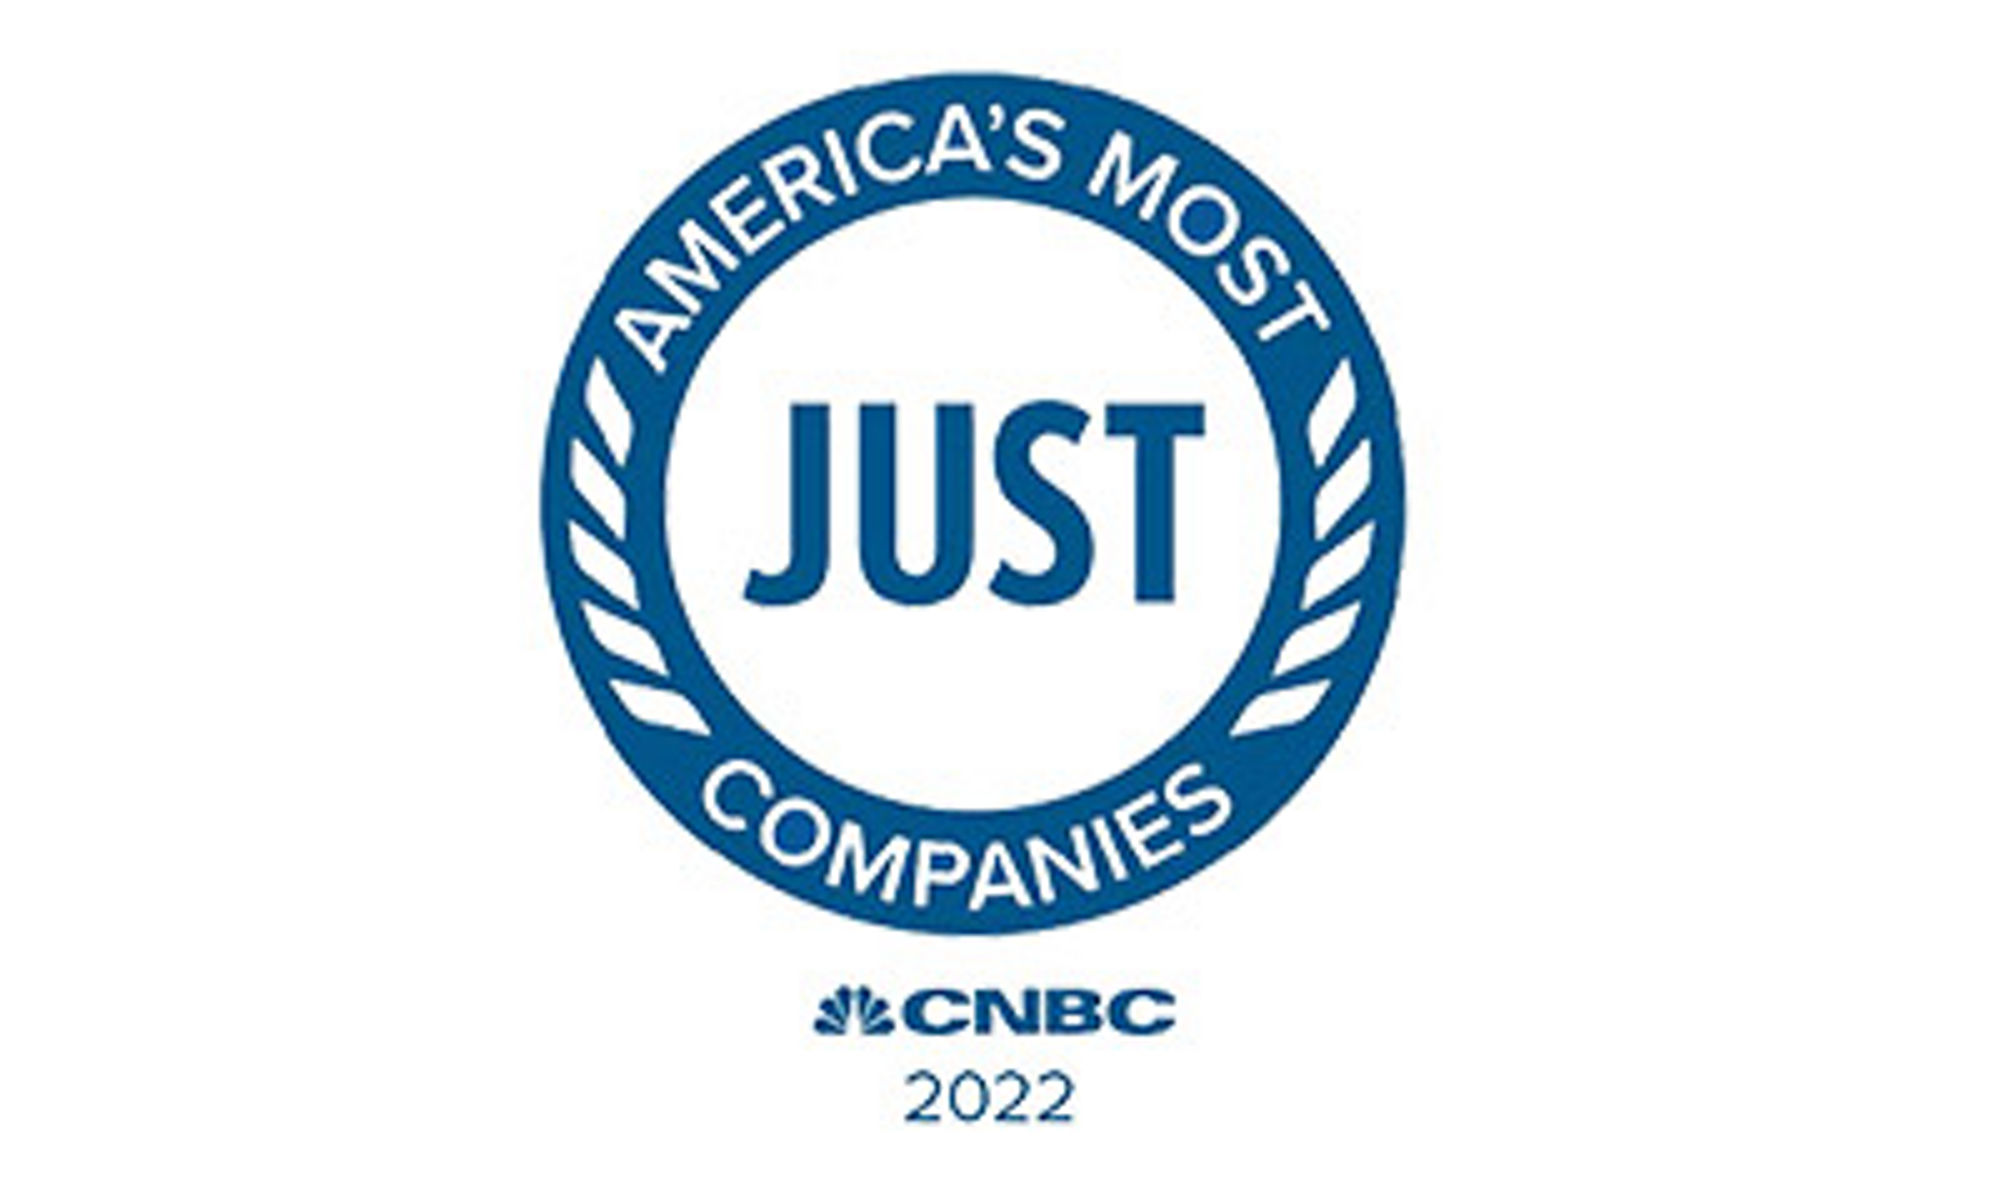 CNBC America's Most Just Companies award logo